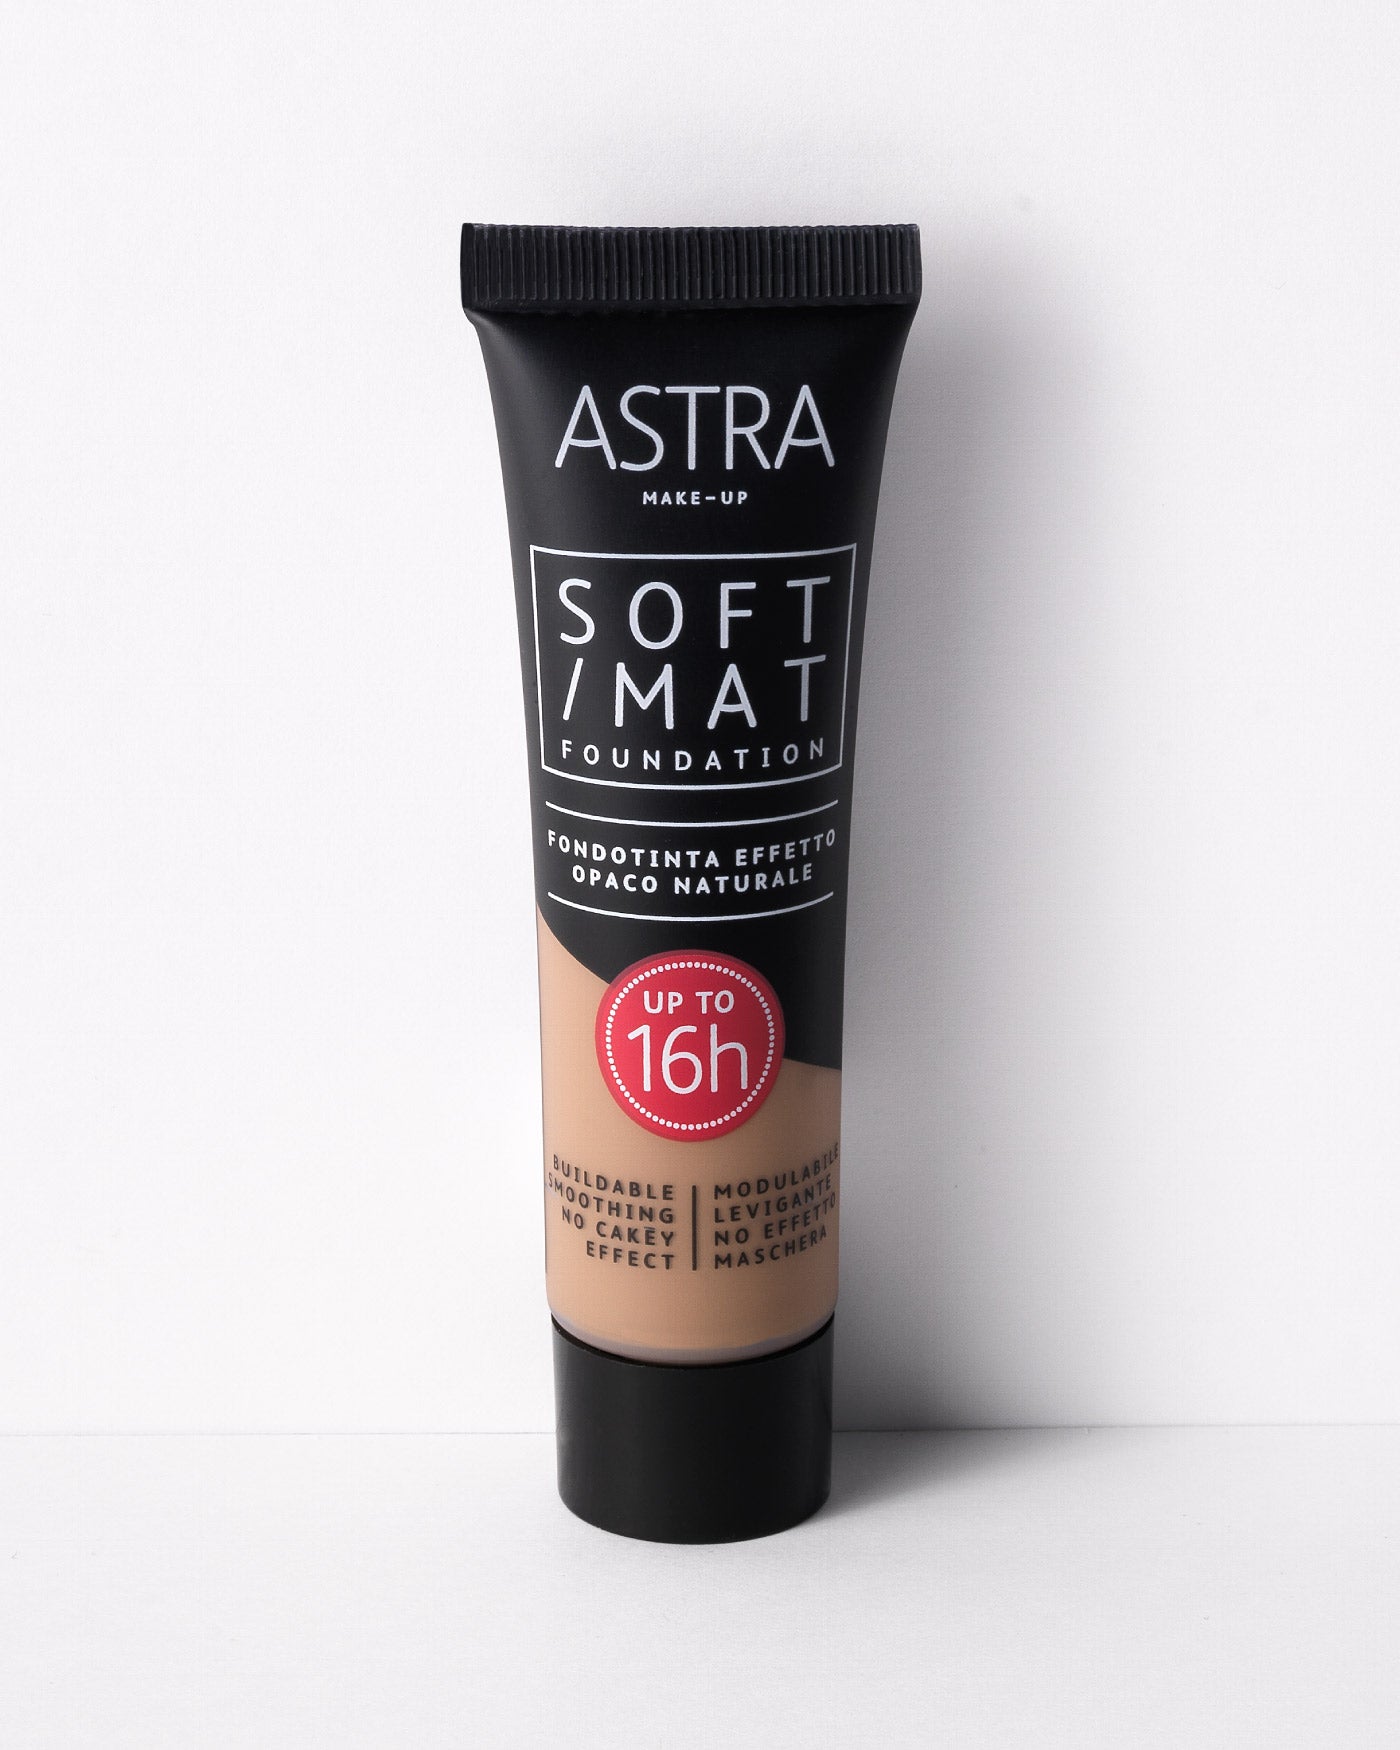 SOFT MAT FOUNDATION - Fondotinta Effetto Opaco Naturale - 07 - Cinnamon - Astra Make-Up